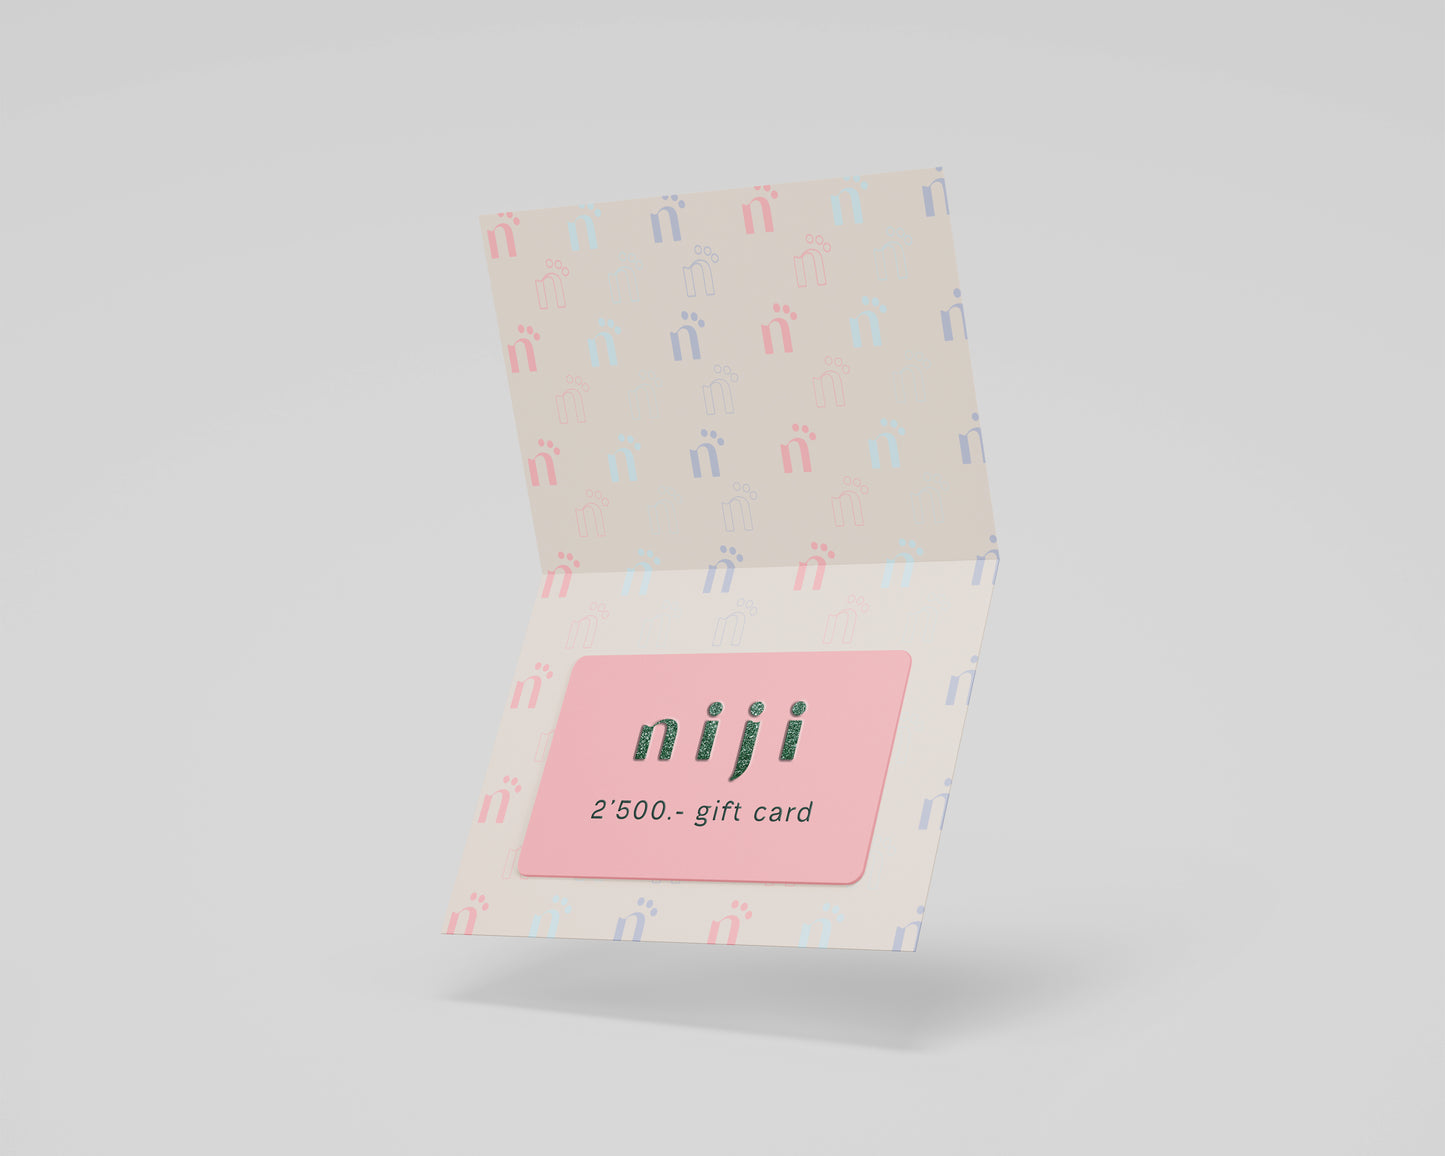 Gift the Niji